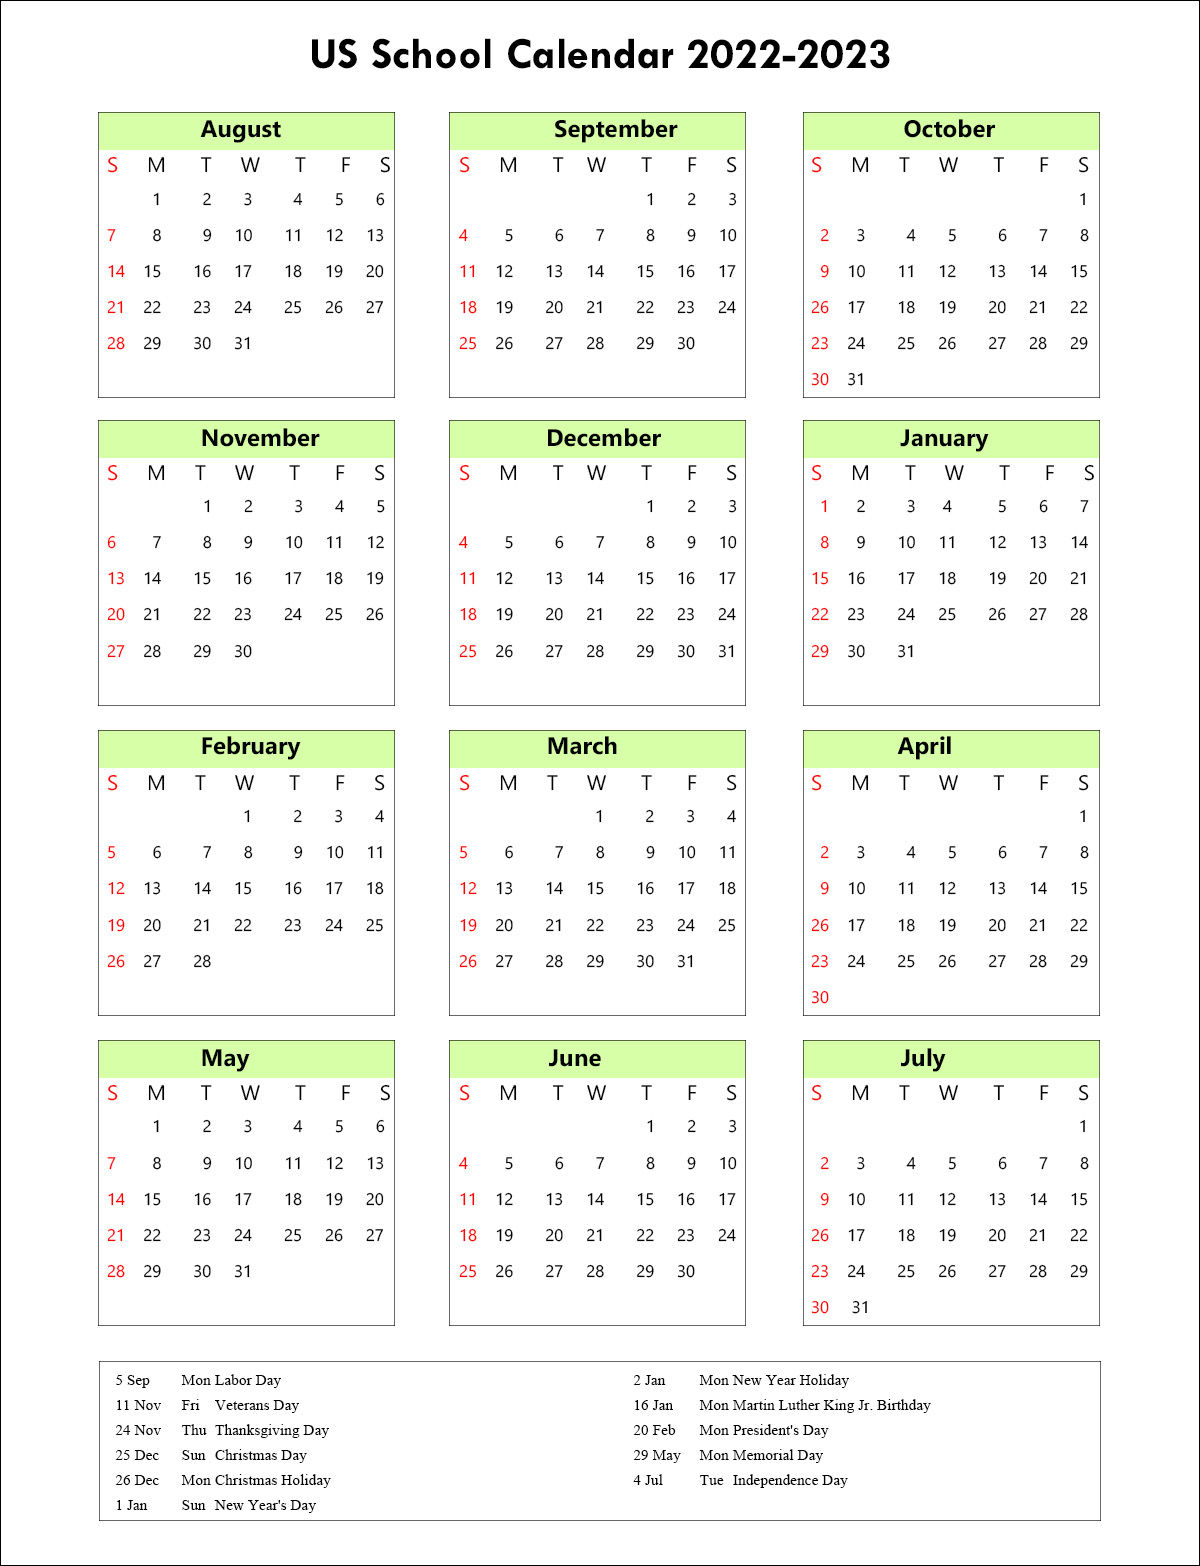 US School Holiday Calendar 2023